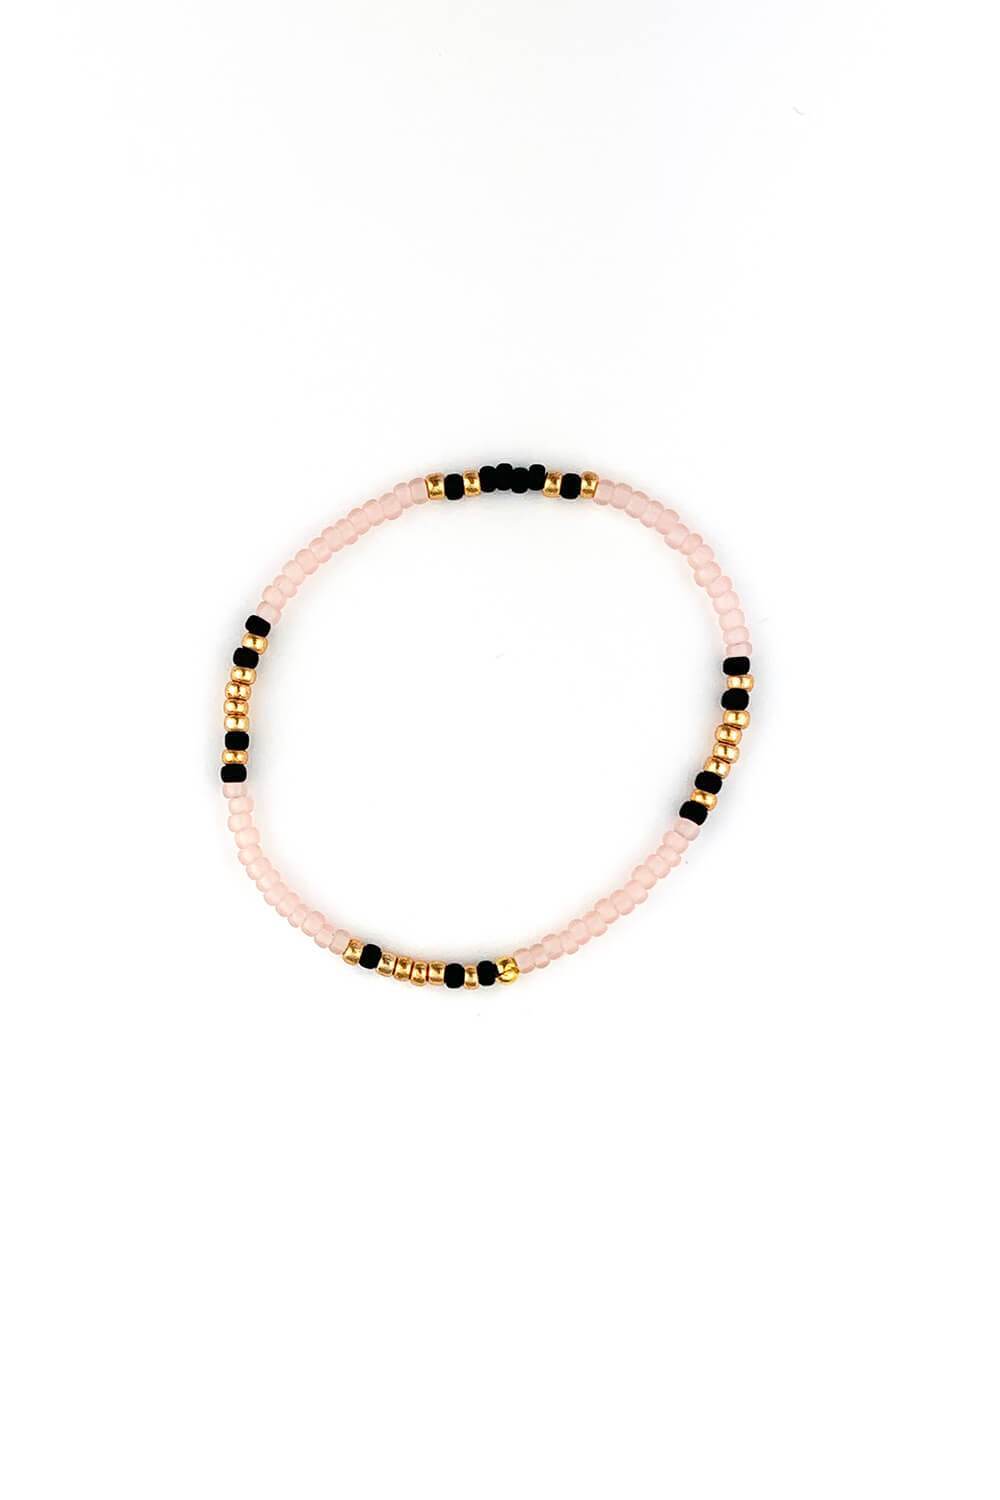 Bracelet Stackables - Sarah Marie Design Studio